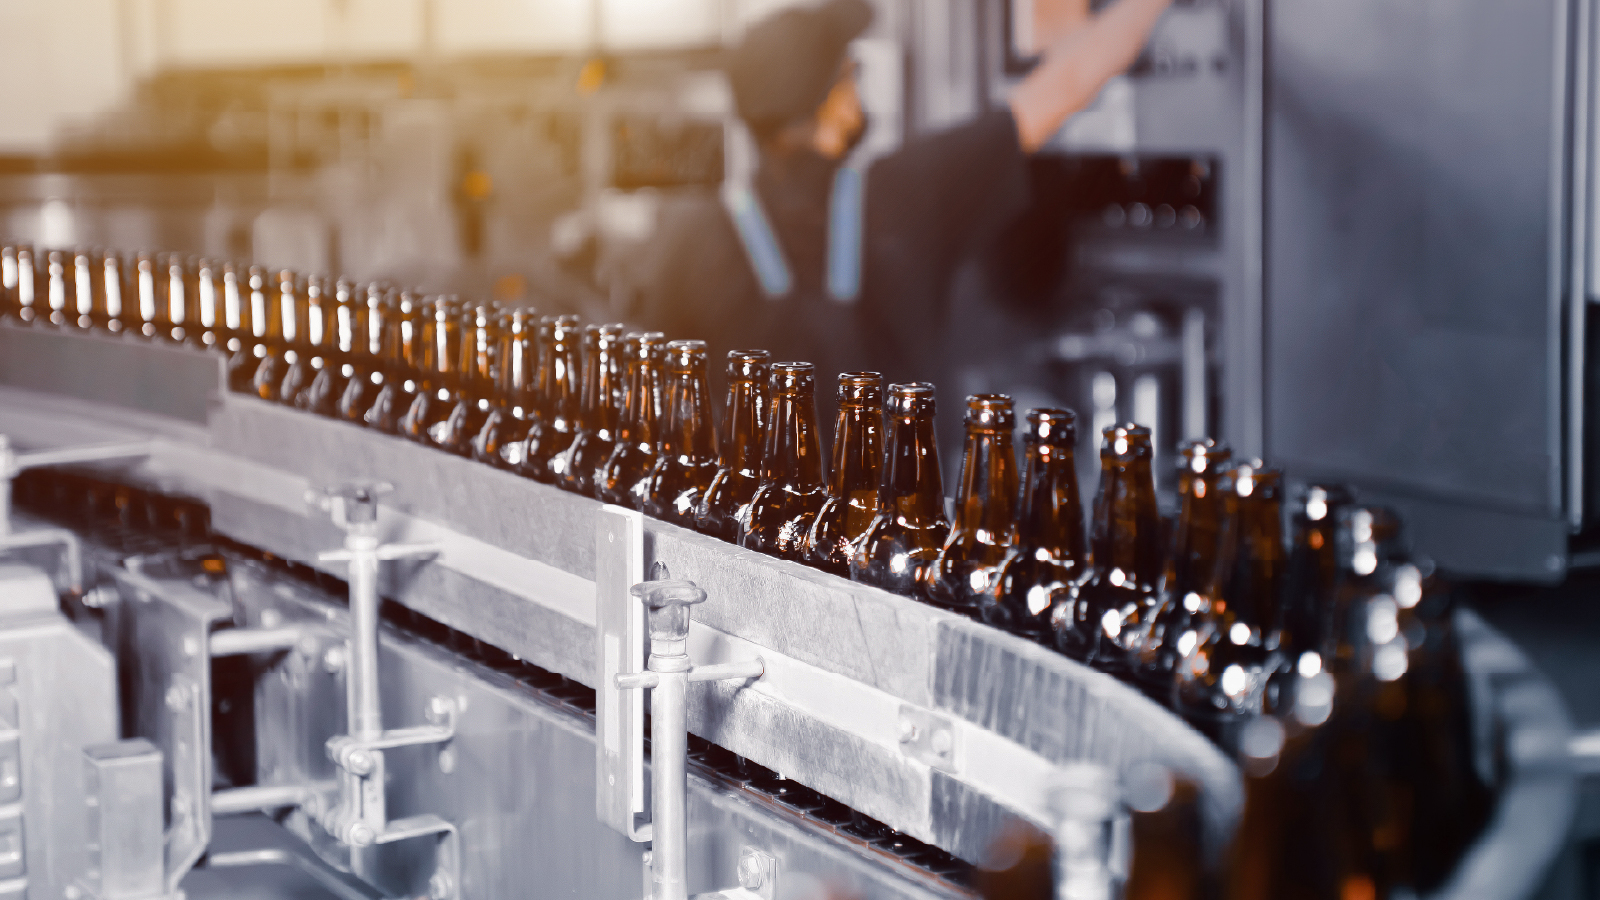 Image of dozens of bottles crowded on a conveyor belt